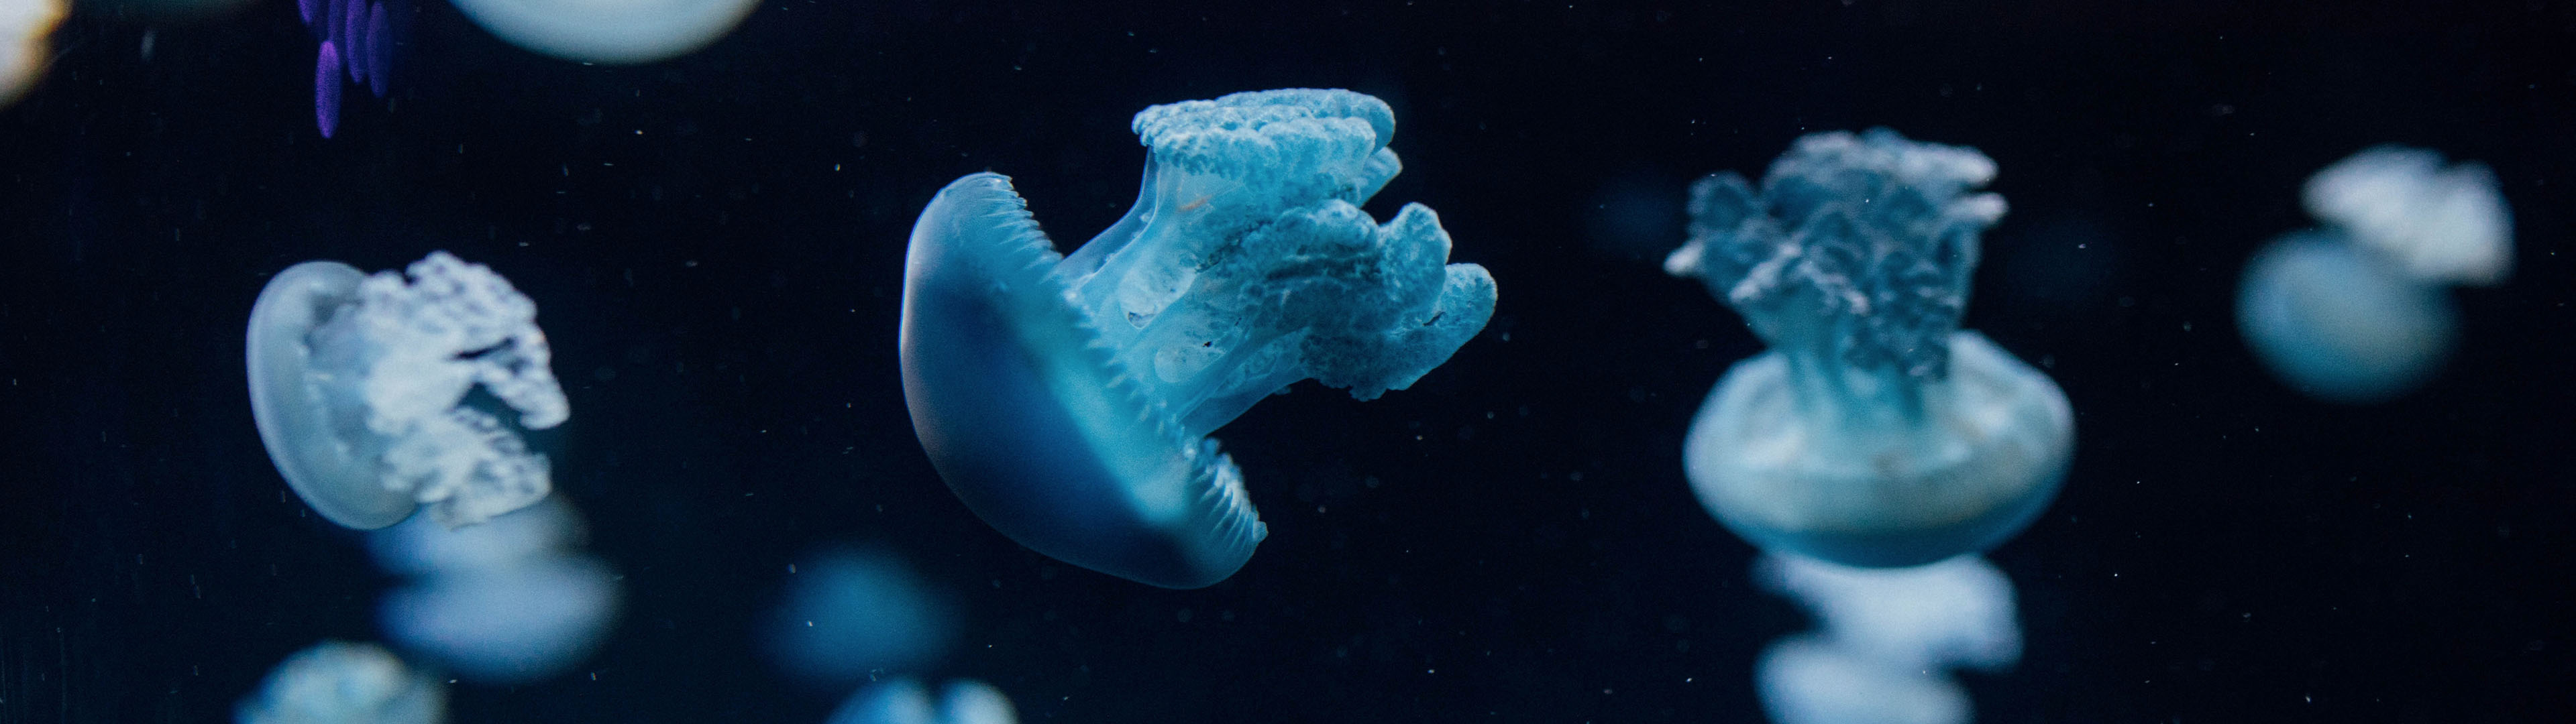 Floating jellyfish, Wide wallpaper, Ultrawide magic, Mesmerizing underwater, 3840x1080 Dual Screen Desktop